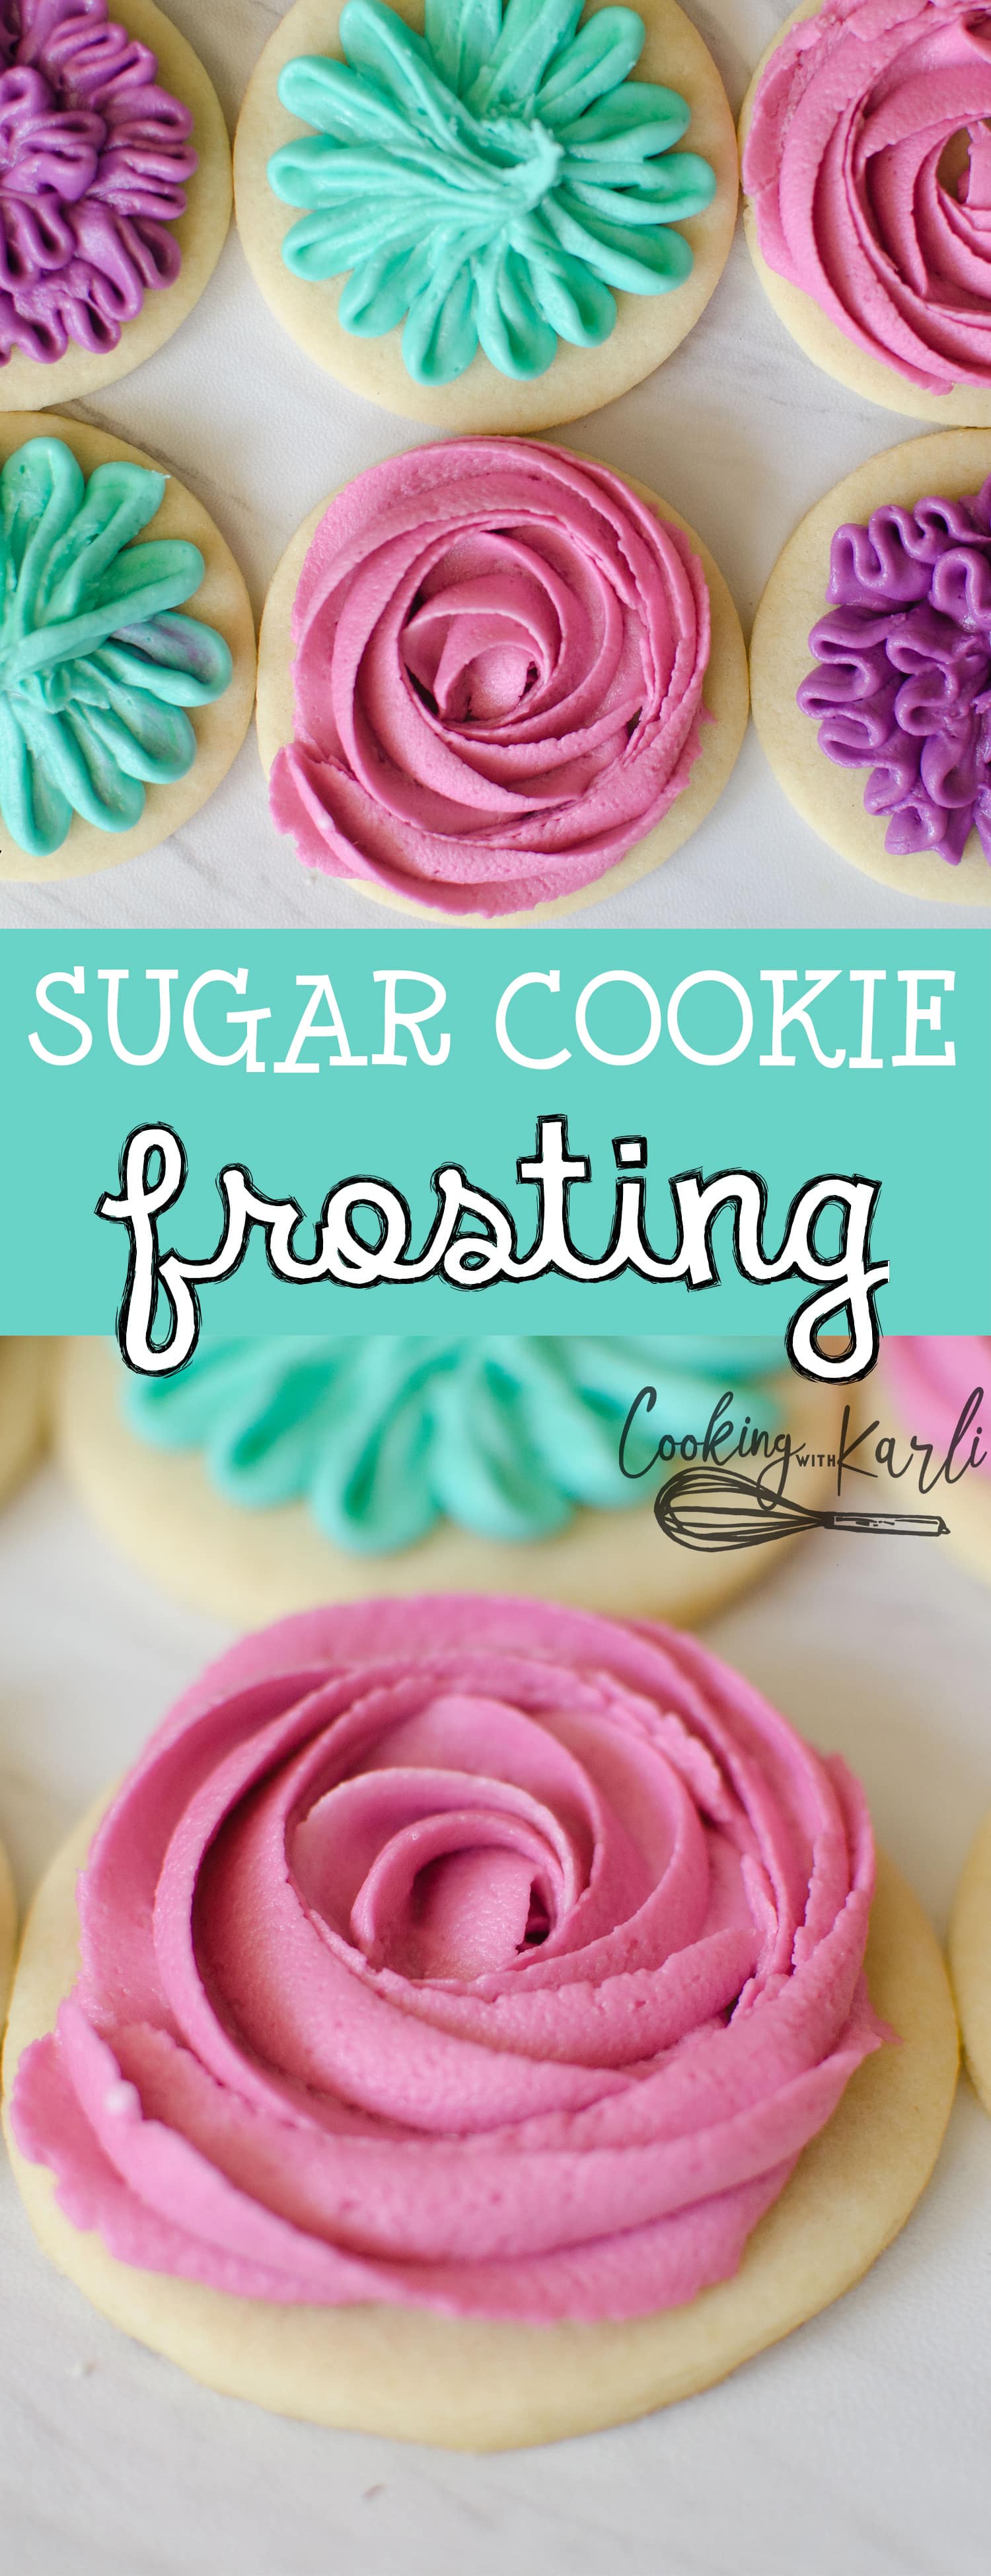 Sugar Cookie Frosting Cooking With Karli